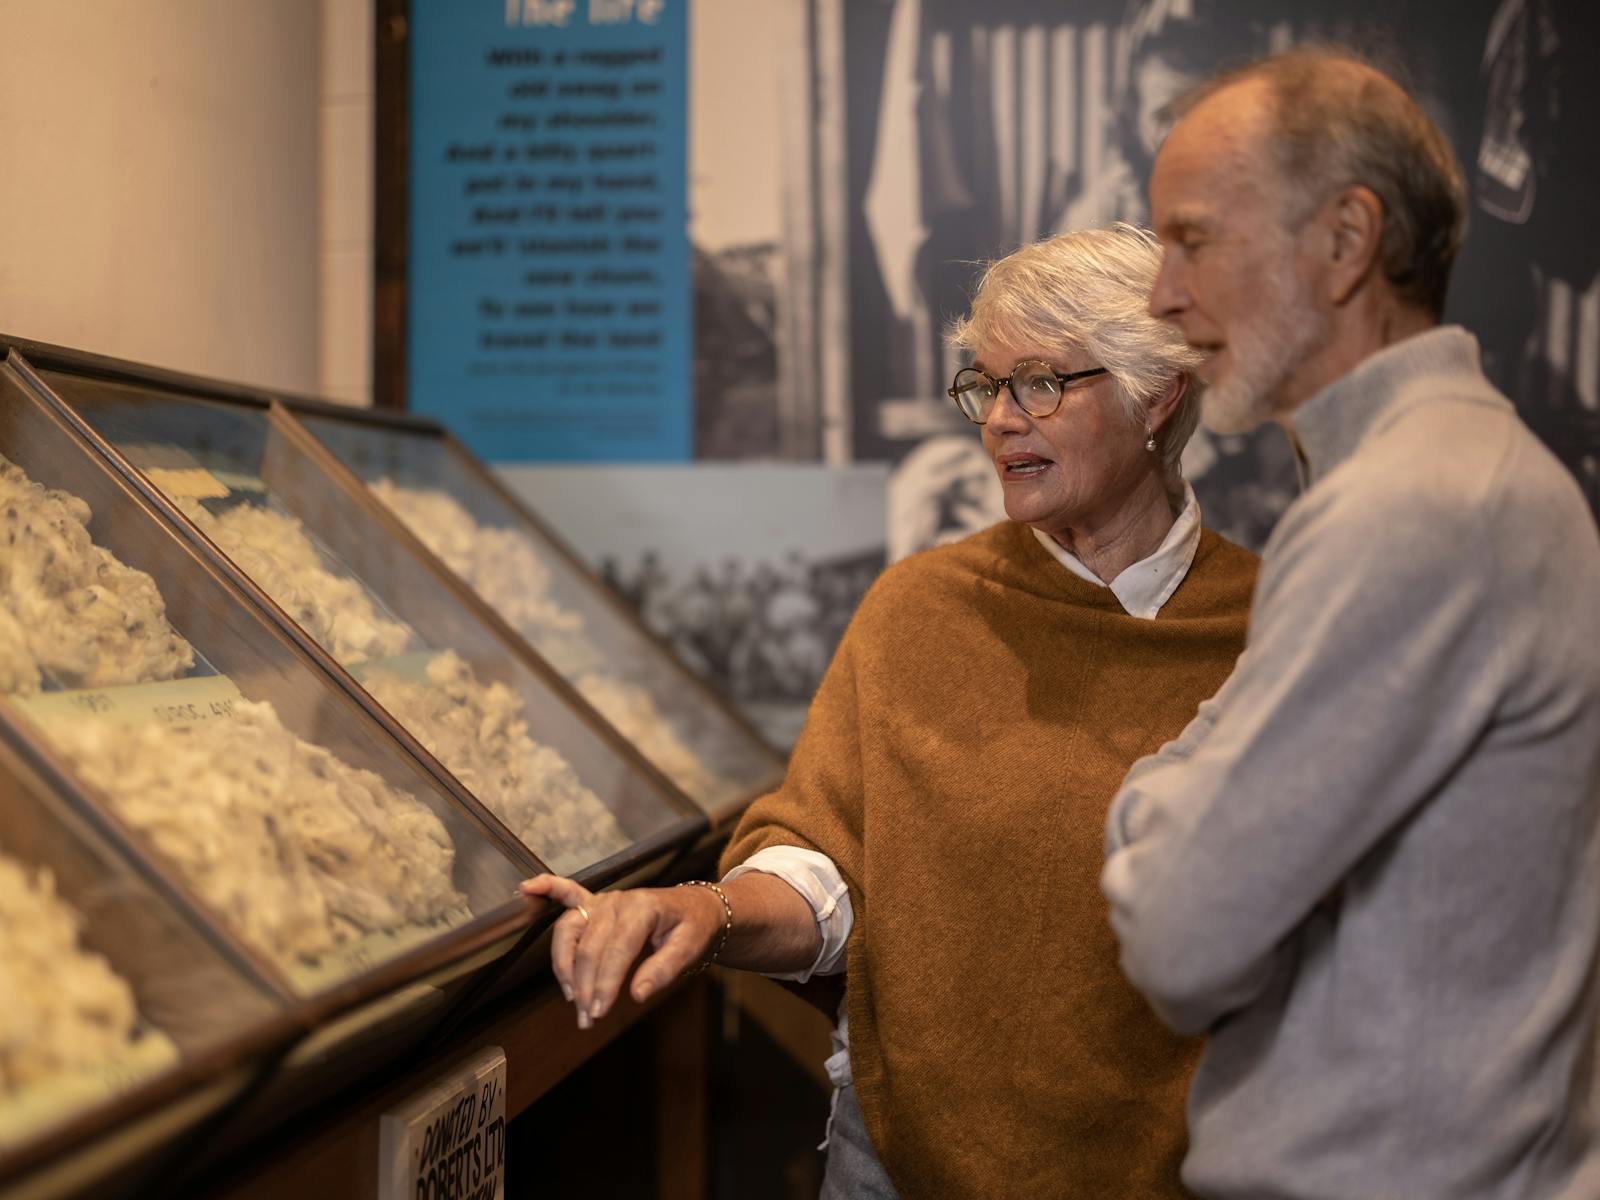 Two people admiring fleece samples in the museum's Wool Room